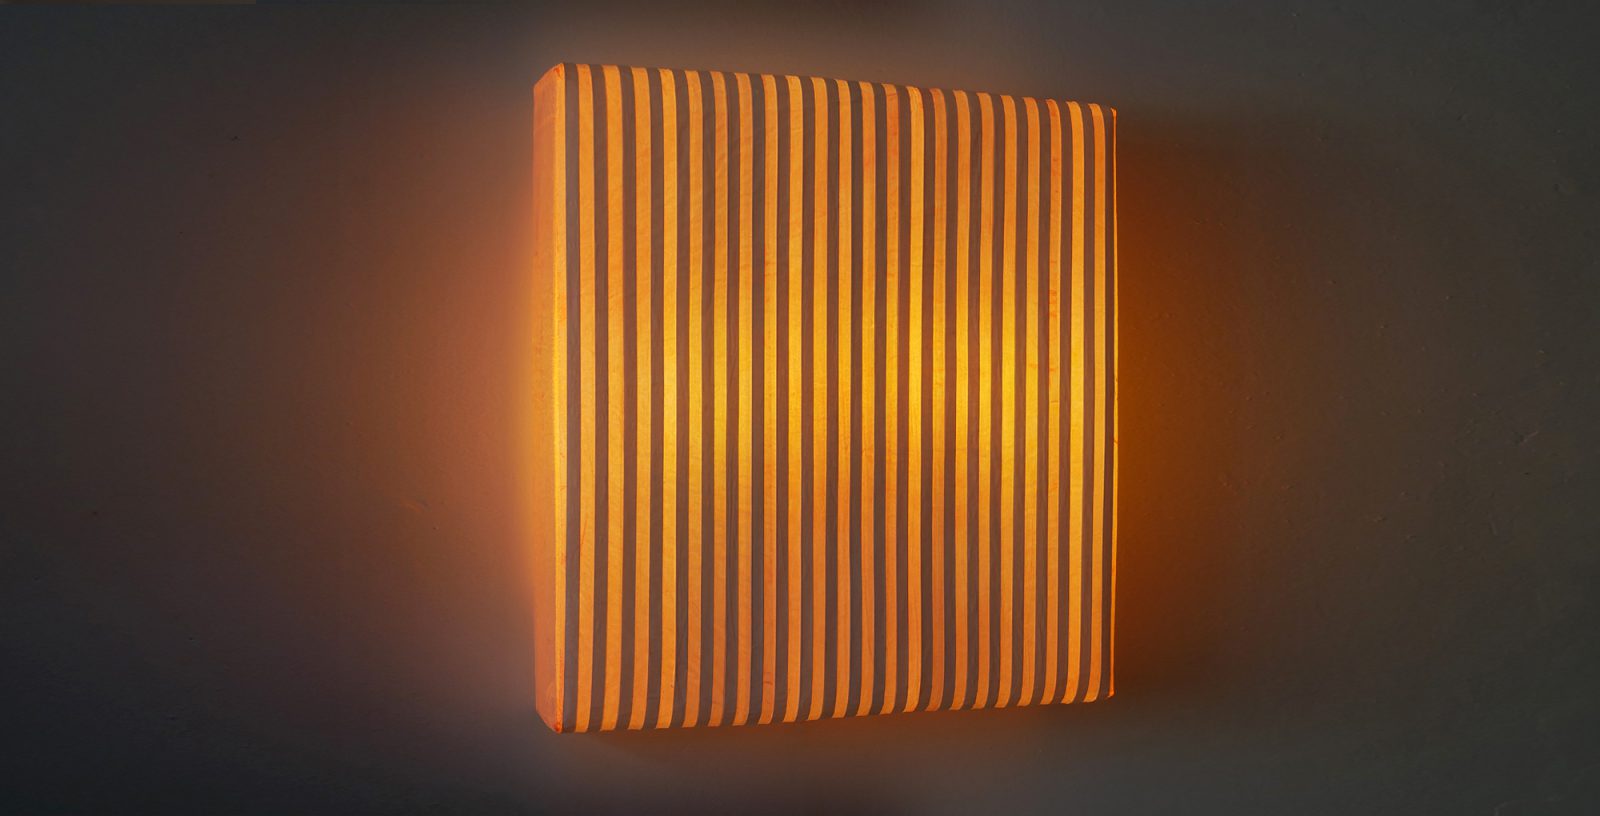 Leuchtobjekt - Papier, Ölfarbe, Rückwand aus Holz, 80 x 80 x 18 cm I 2017
beleuchtet: orange, unbeleuchtet: weiss